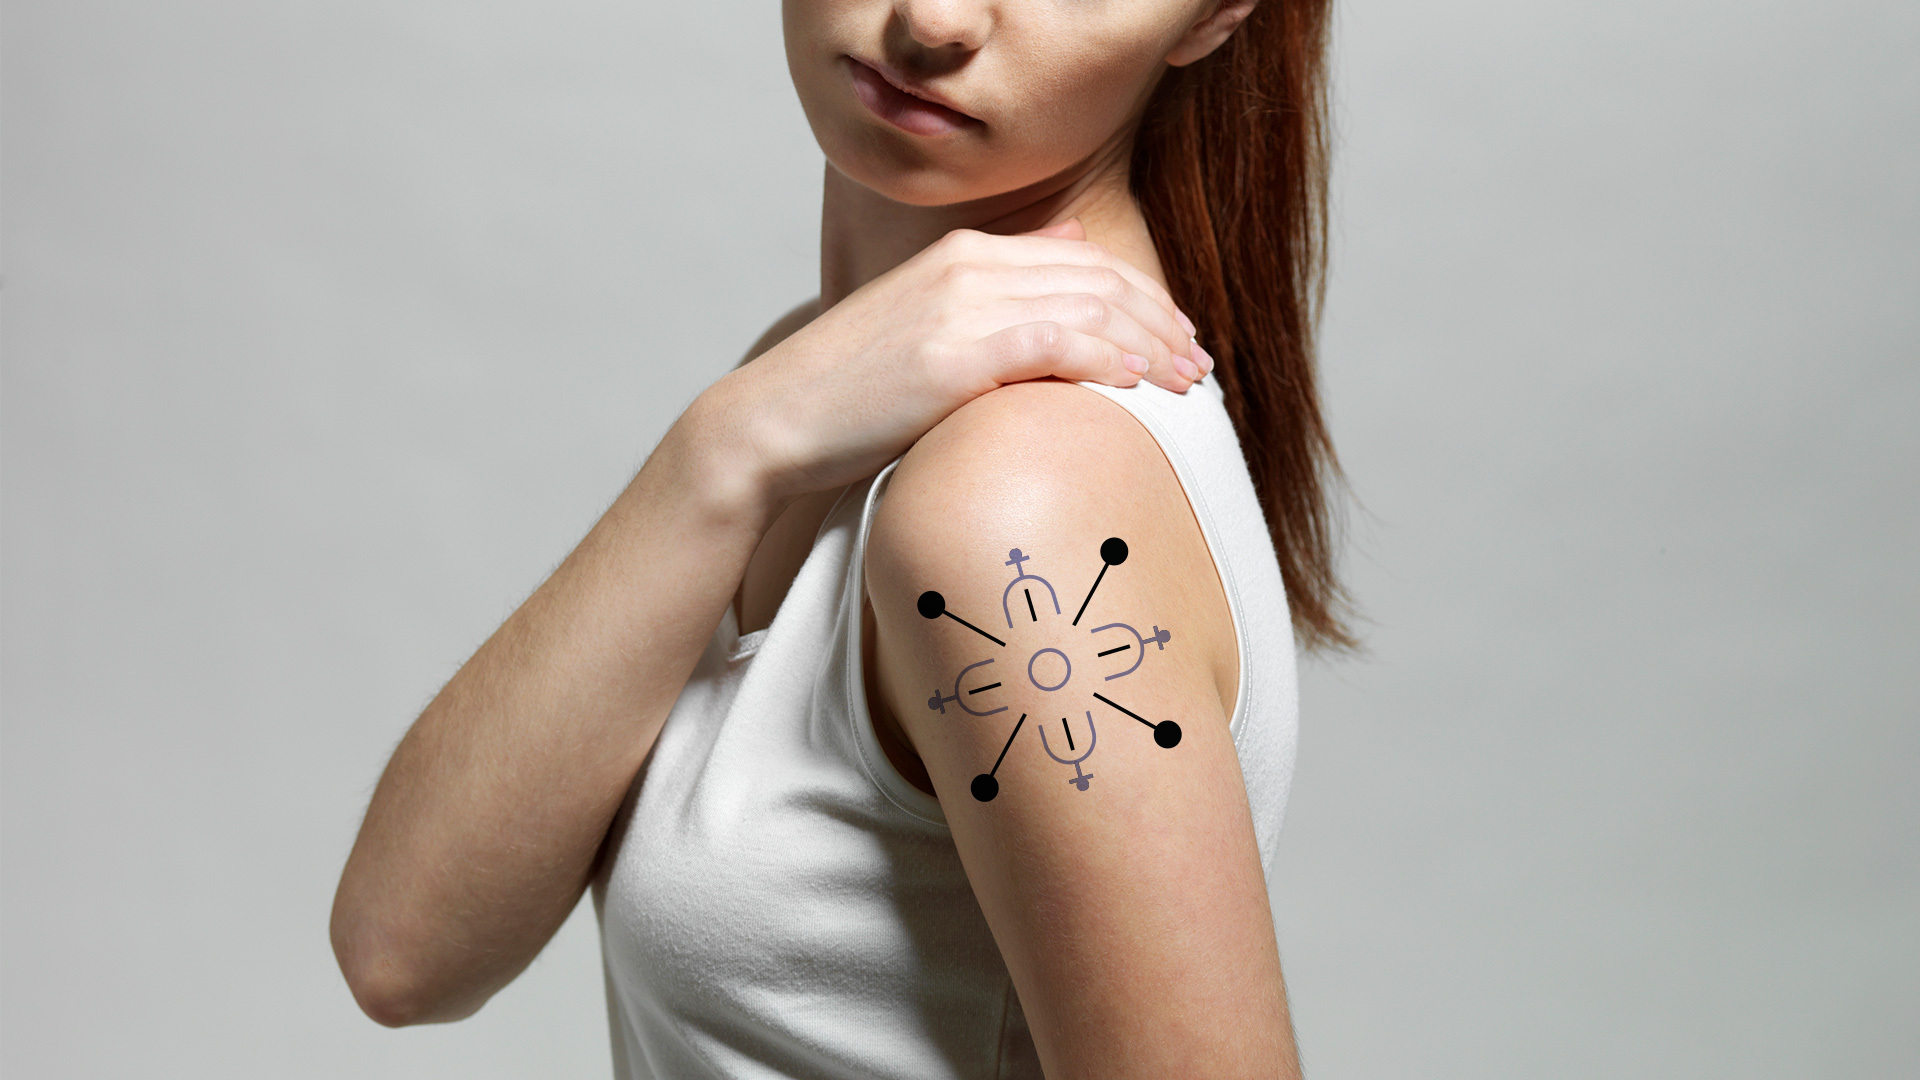 100 Ultimate Medical Tattoo designs  Diabetic Tattoo Symbols